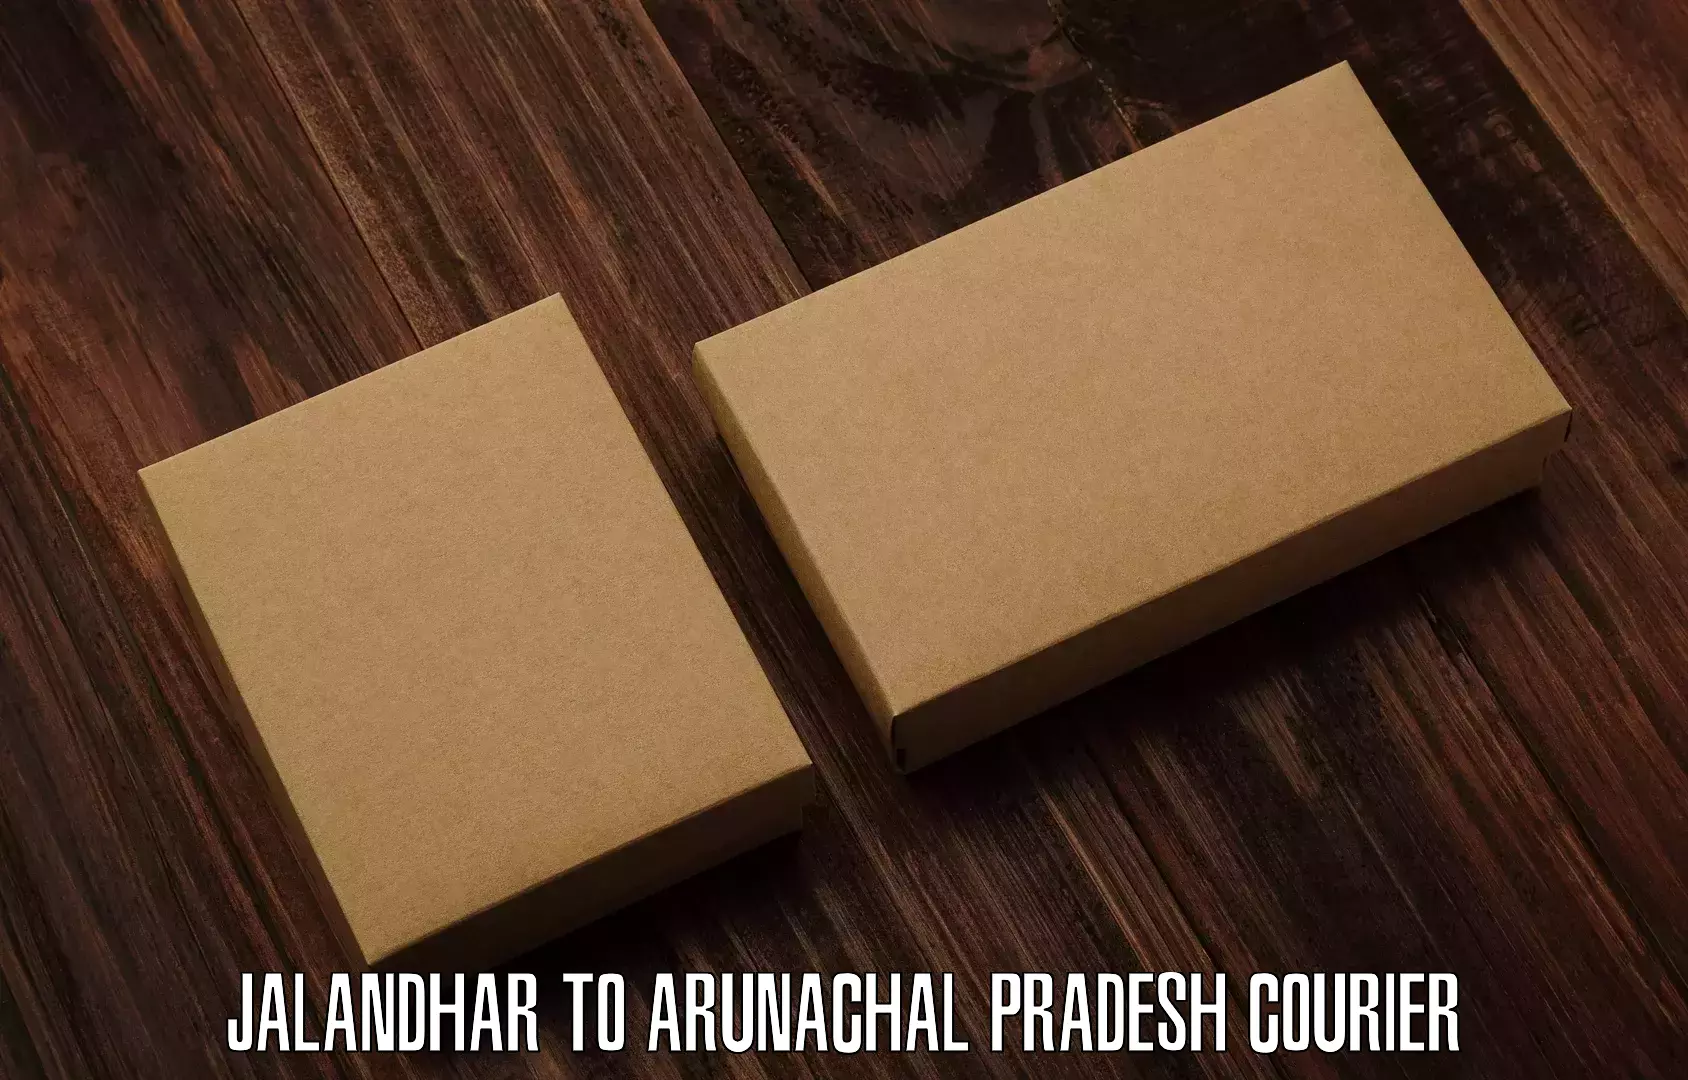 Package delivery network Jalandhar to Jairampur